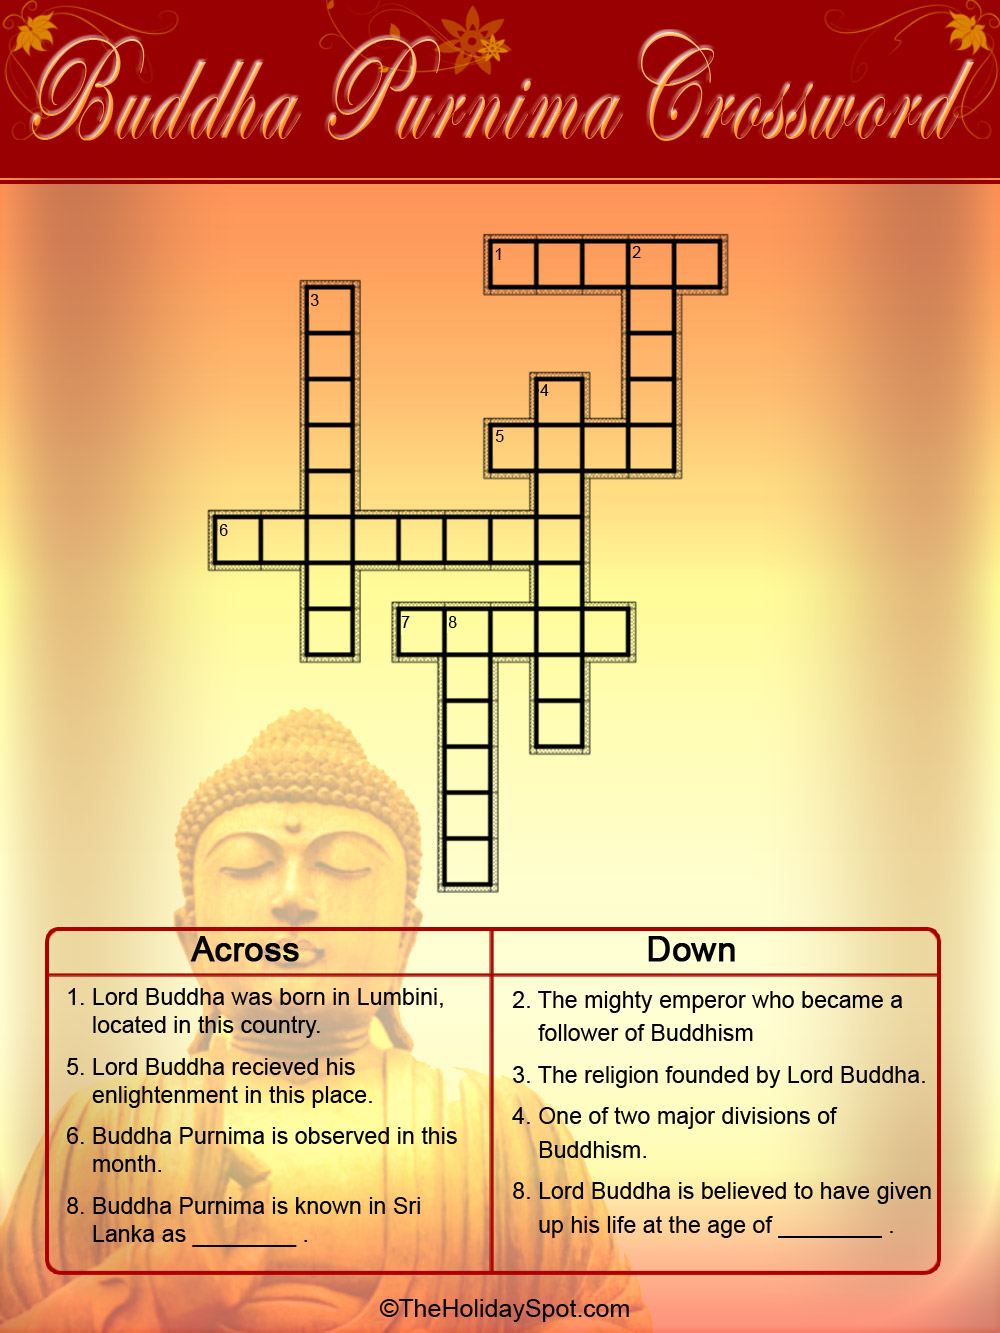 Color Crossword Puzzle for Buddha Purnima